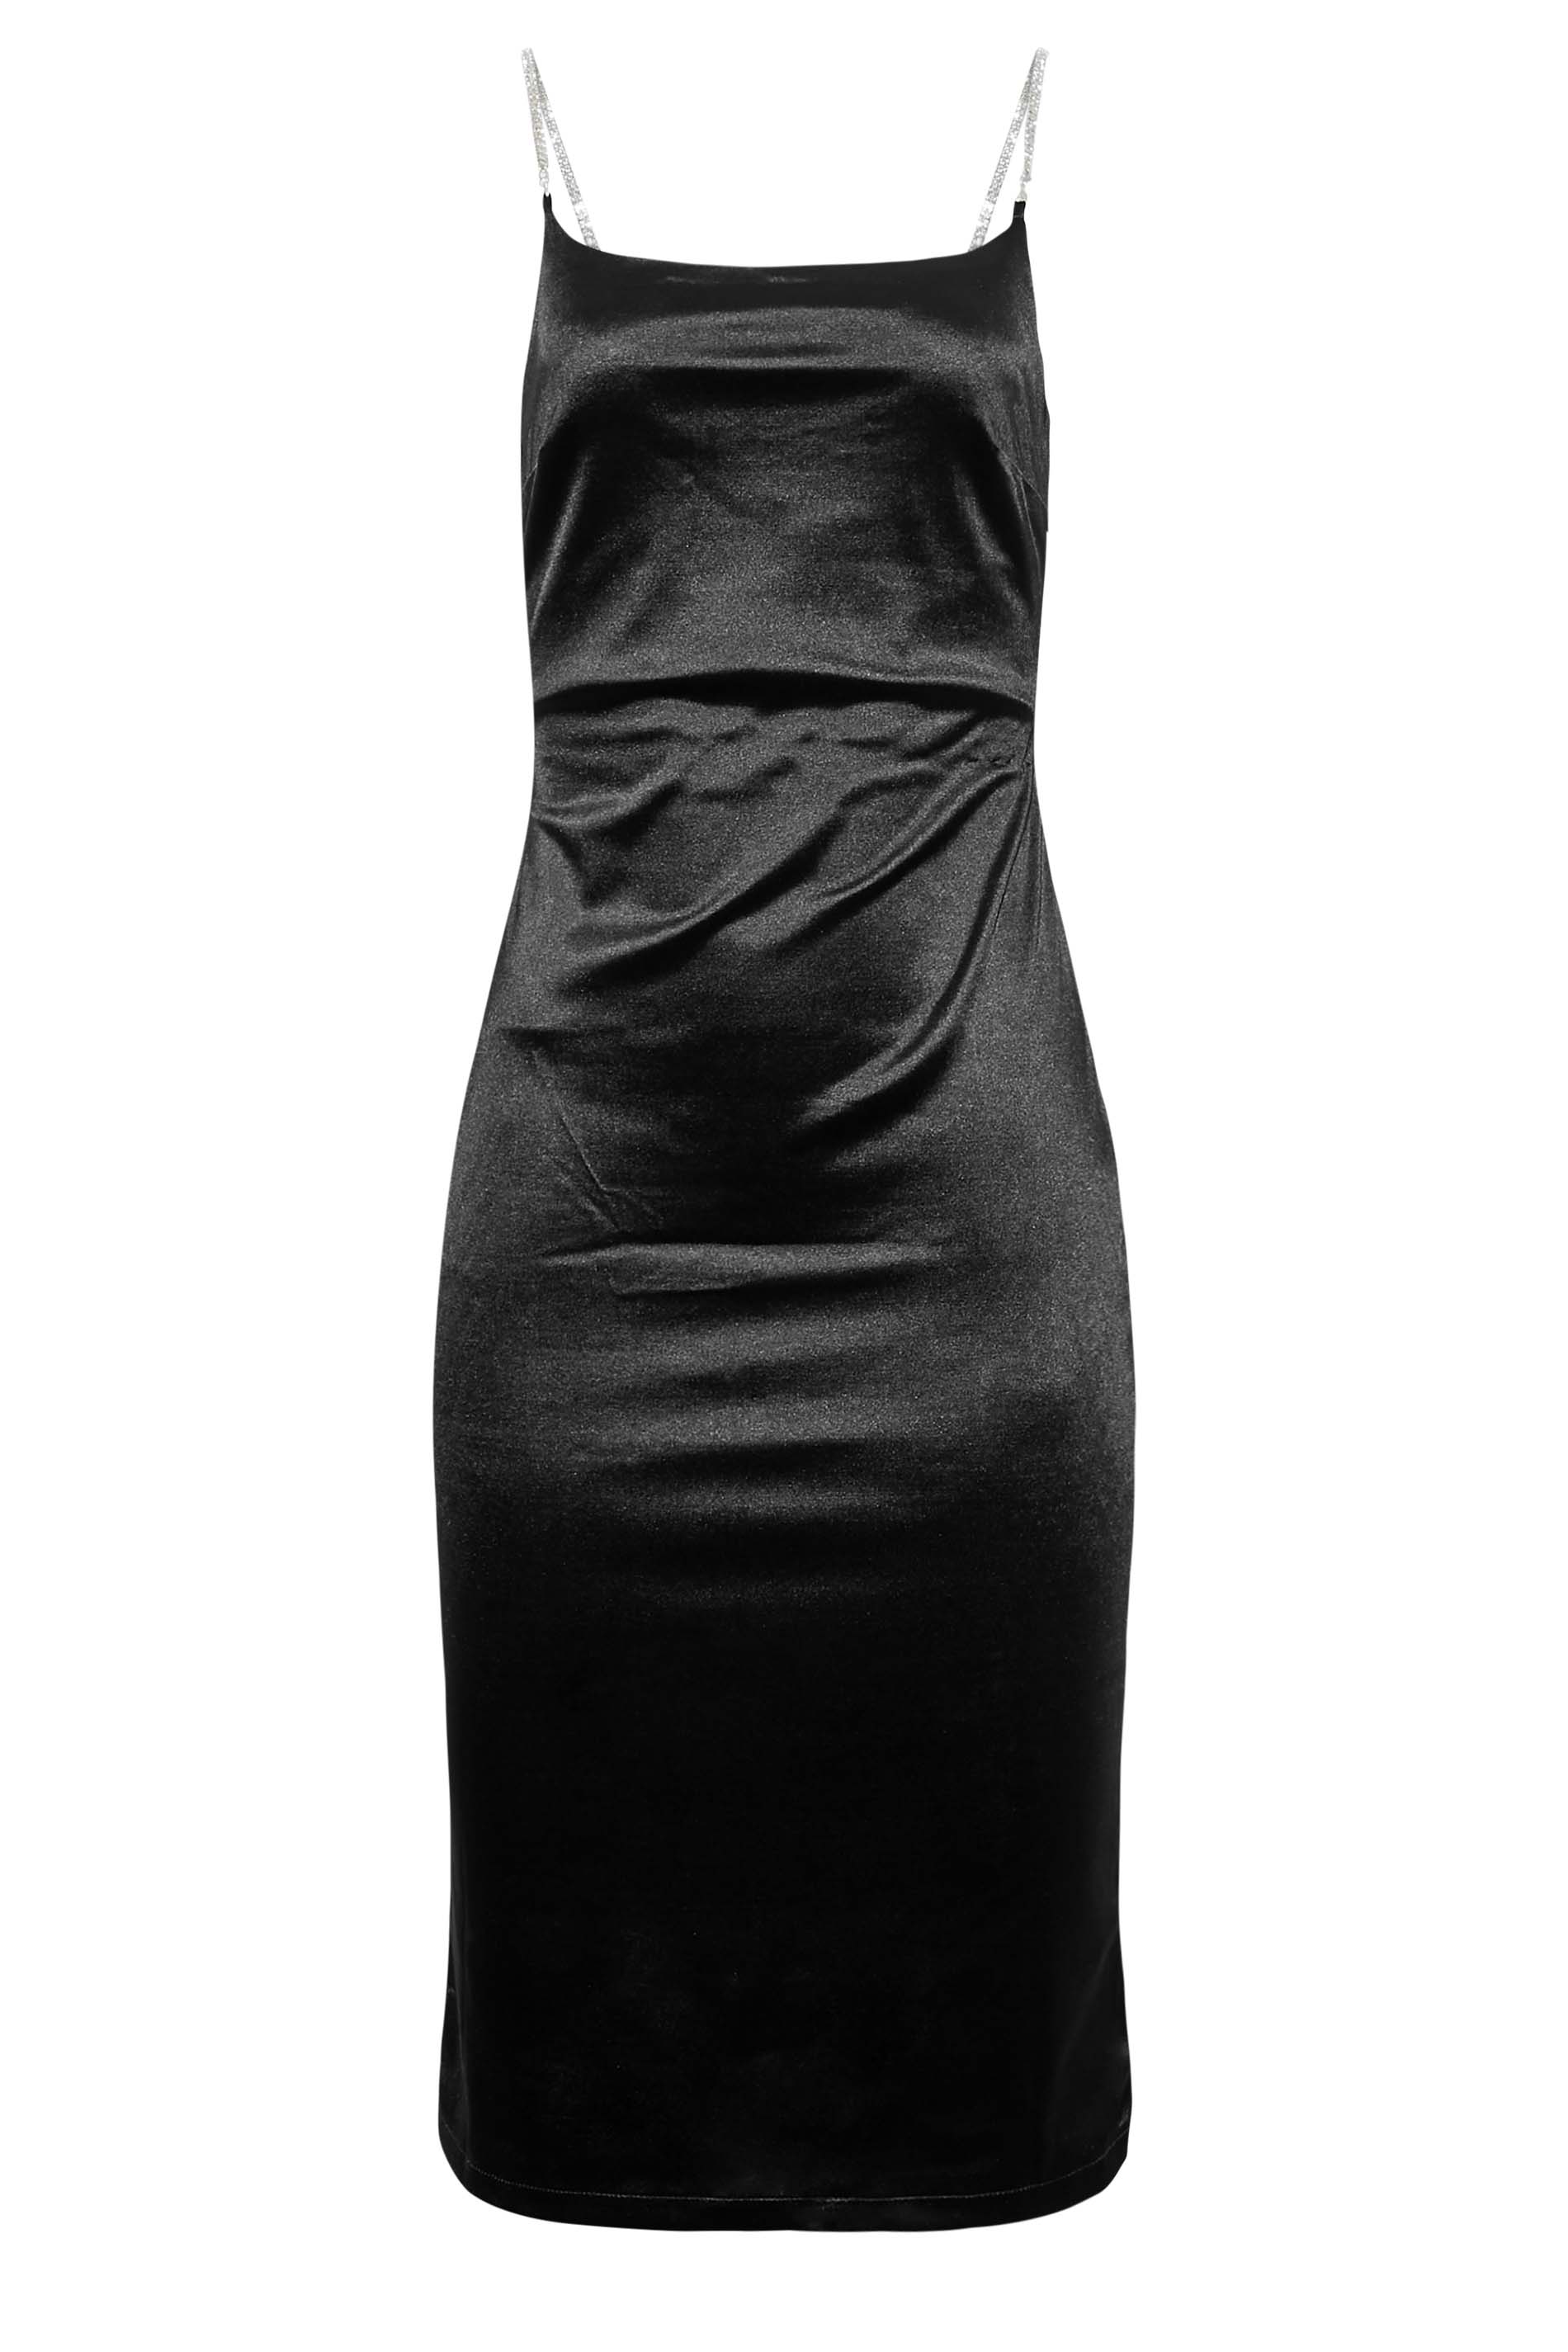 LTS Tall Black Diamante Strap Satin Mini Slip Dress | Long Tall Sally